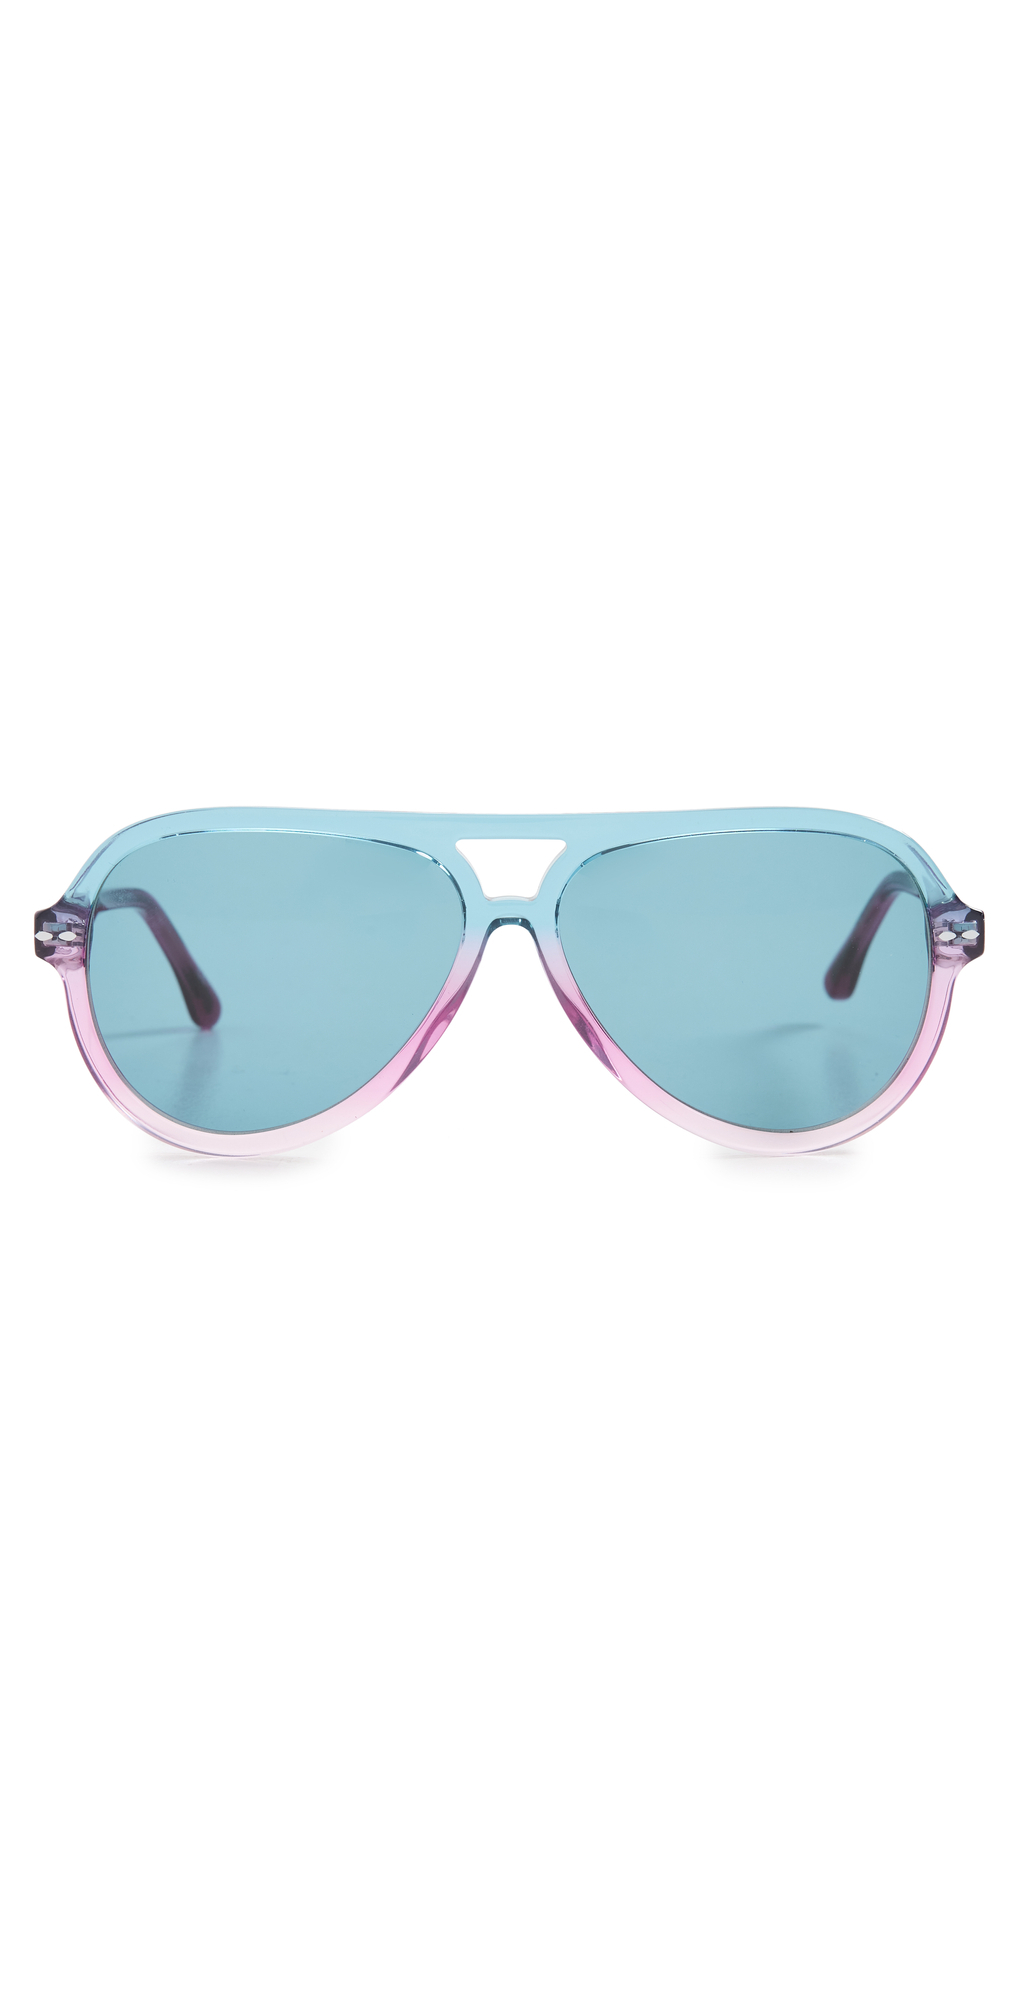 Isabel Marant The In Love Acetate Aviator Sunglasses in blue